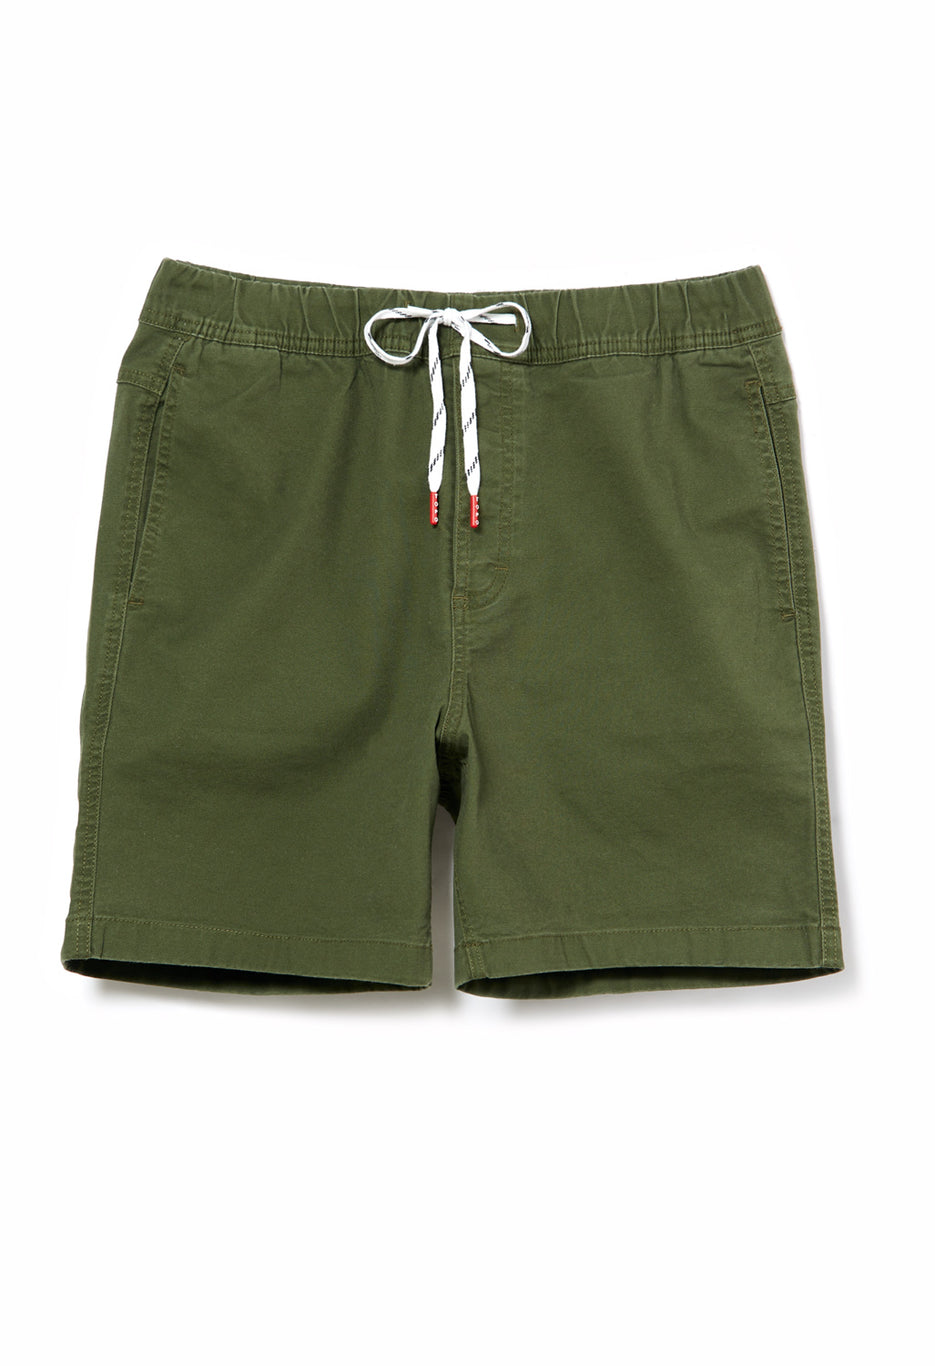 Topo Designs Men's Dirt Shorts 5